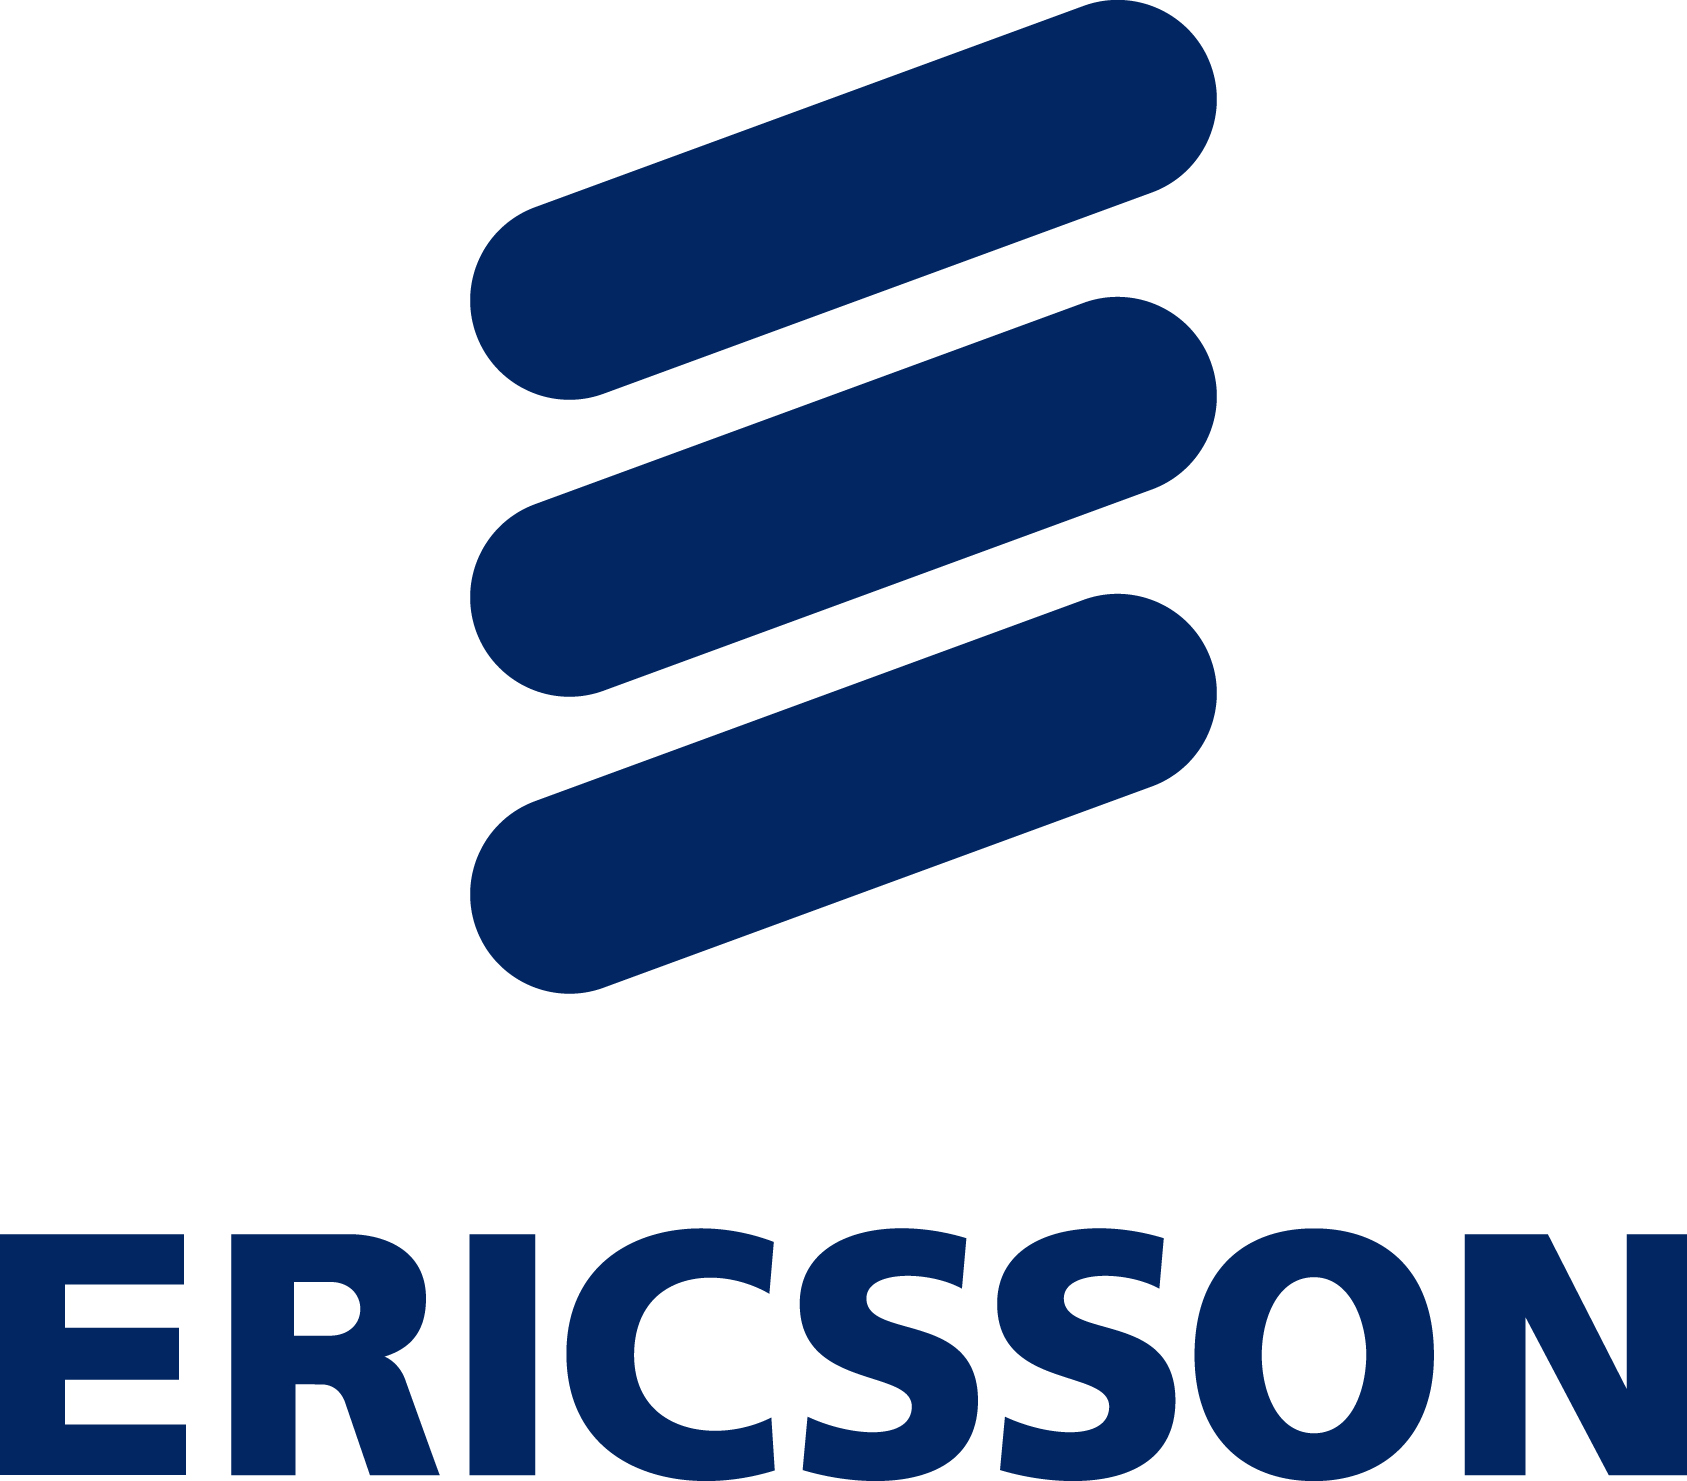 Ericsson - Logo - Blue_cmyk - JPG.JPG